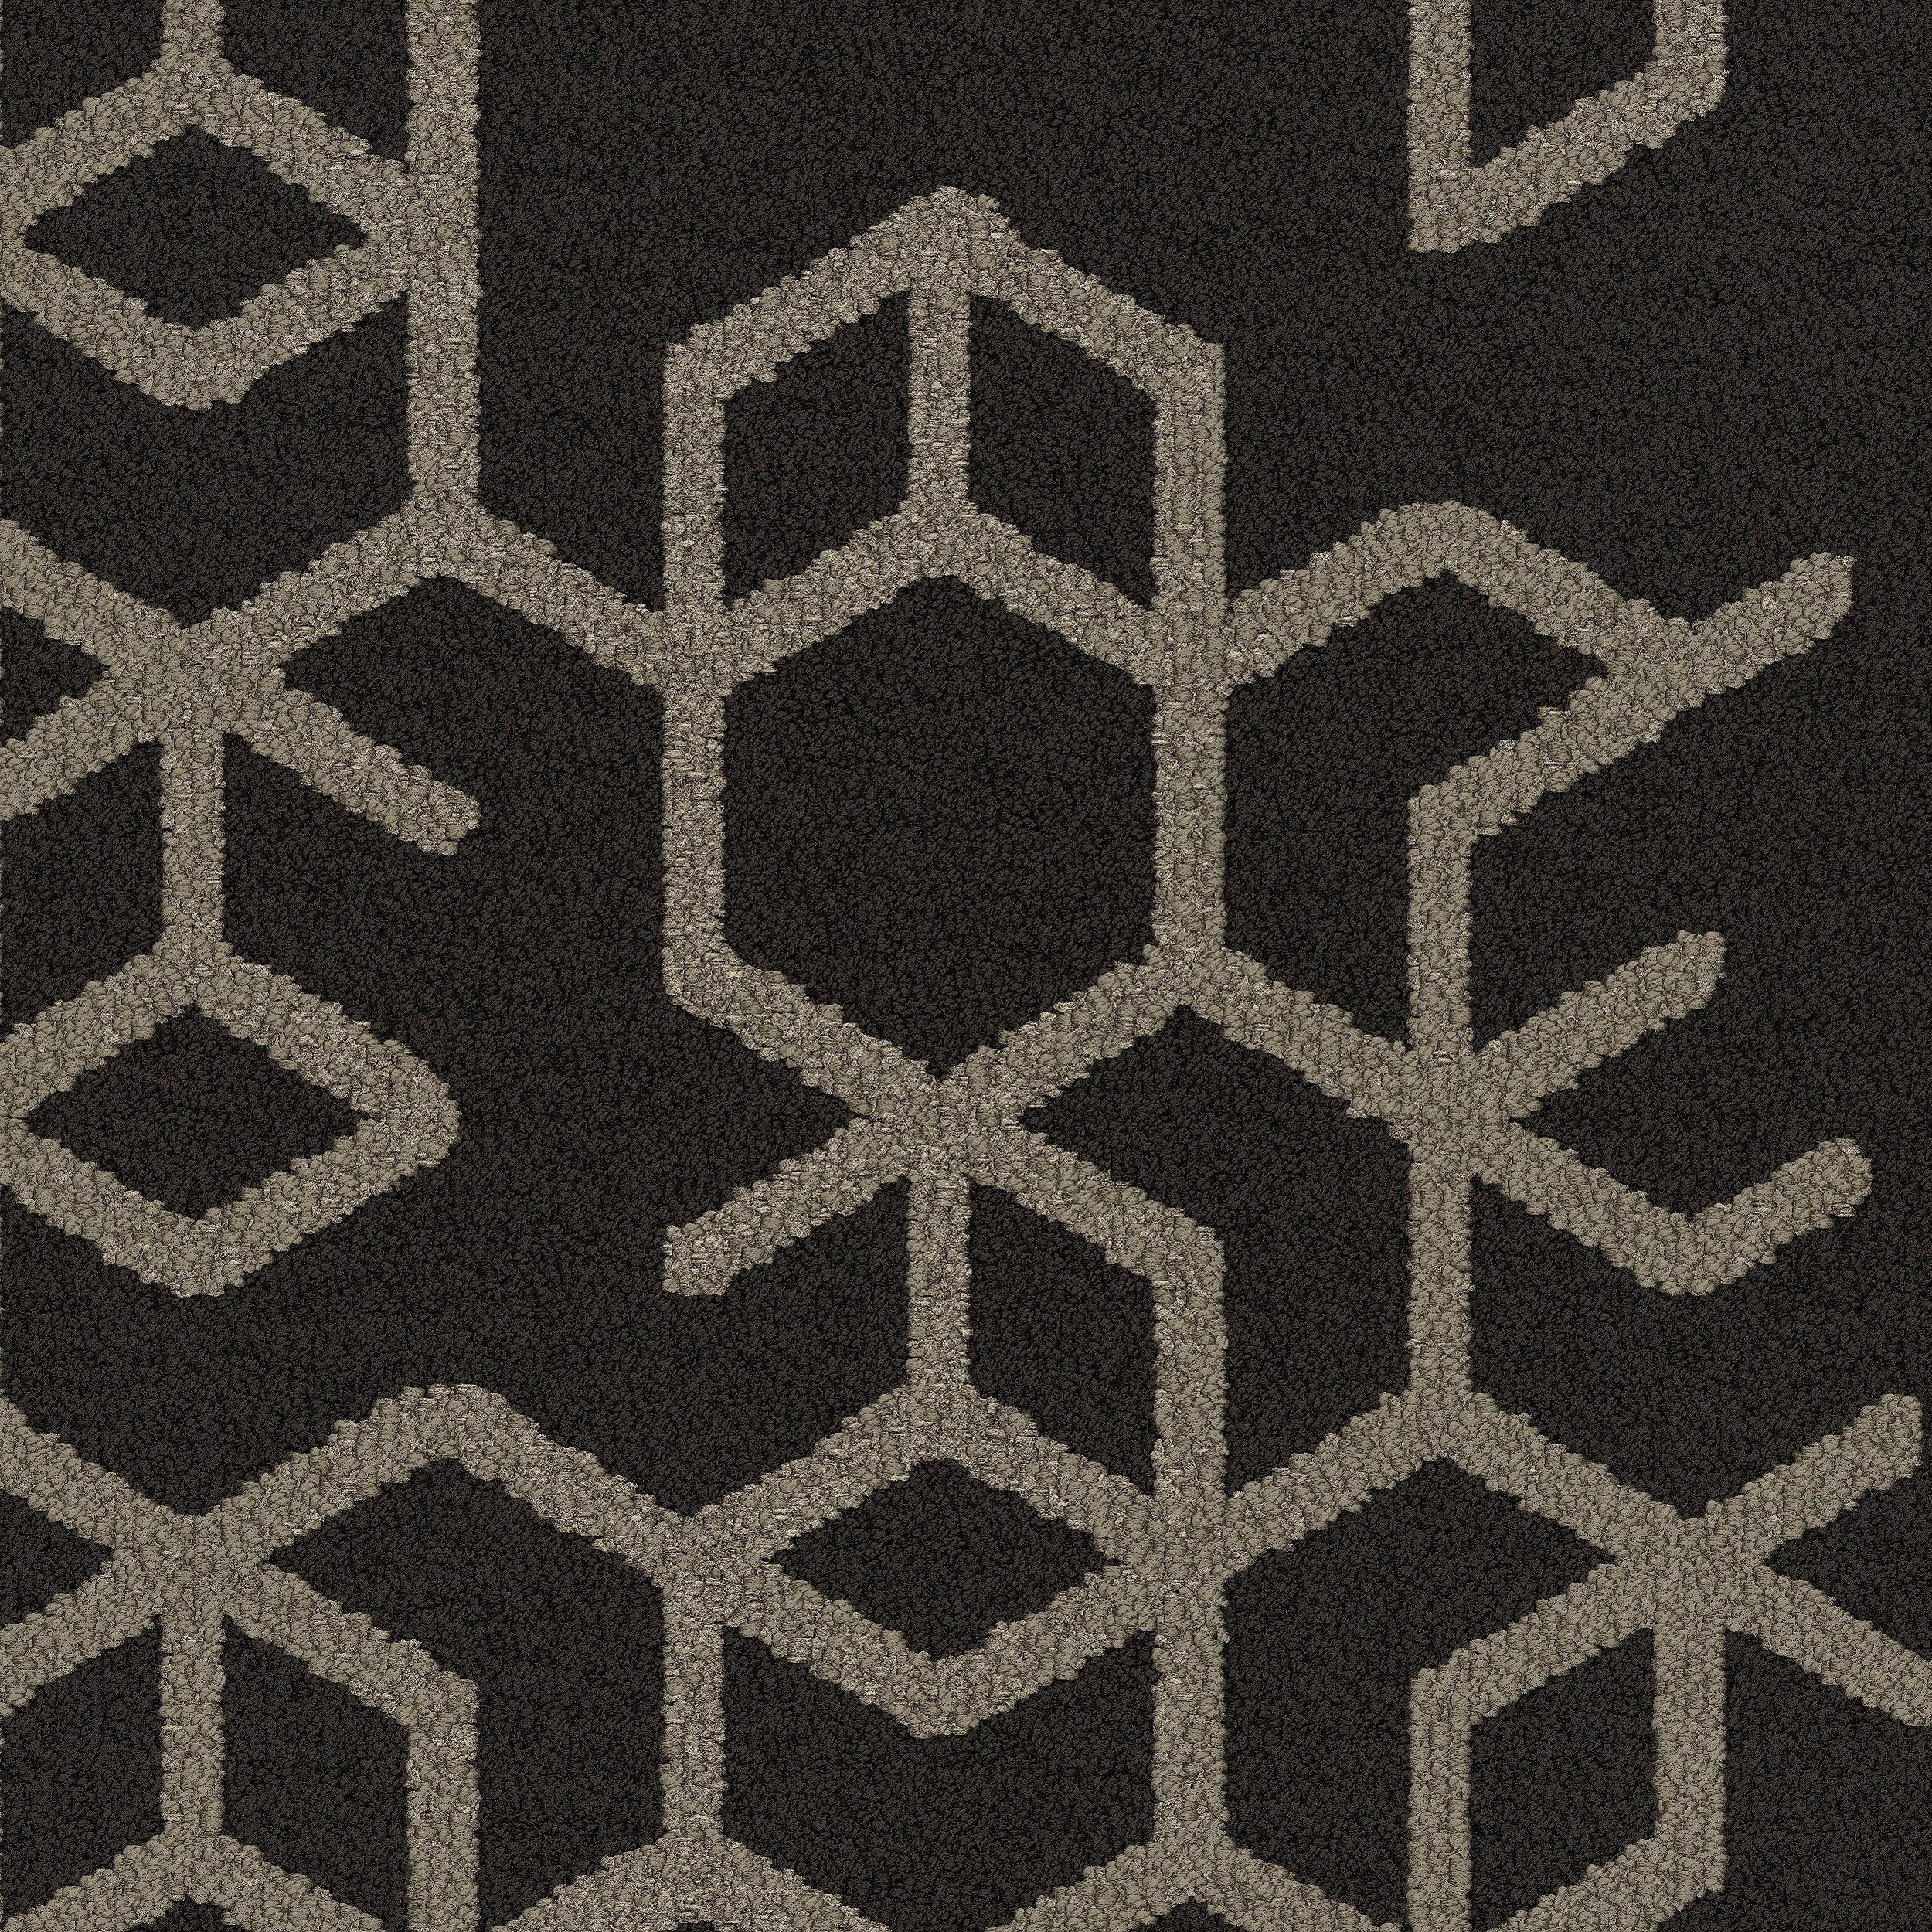 Bees Knees Carpet Tile In Desert Shadow numéro d’image 6